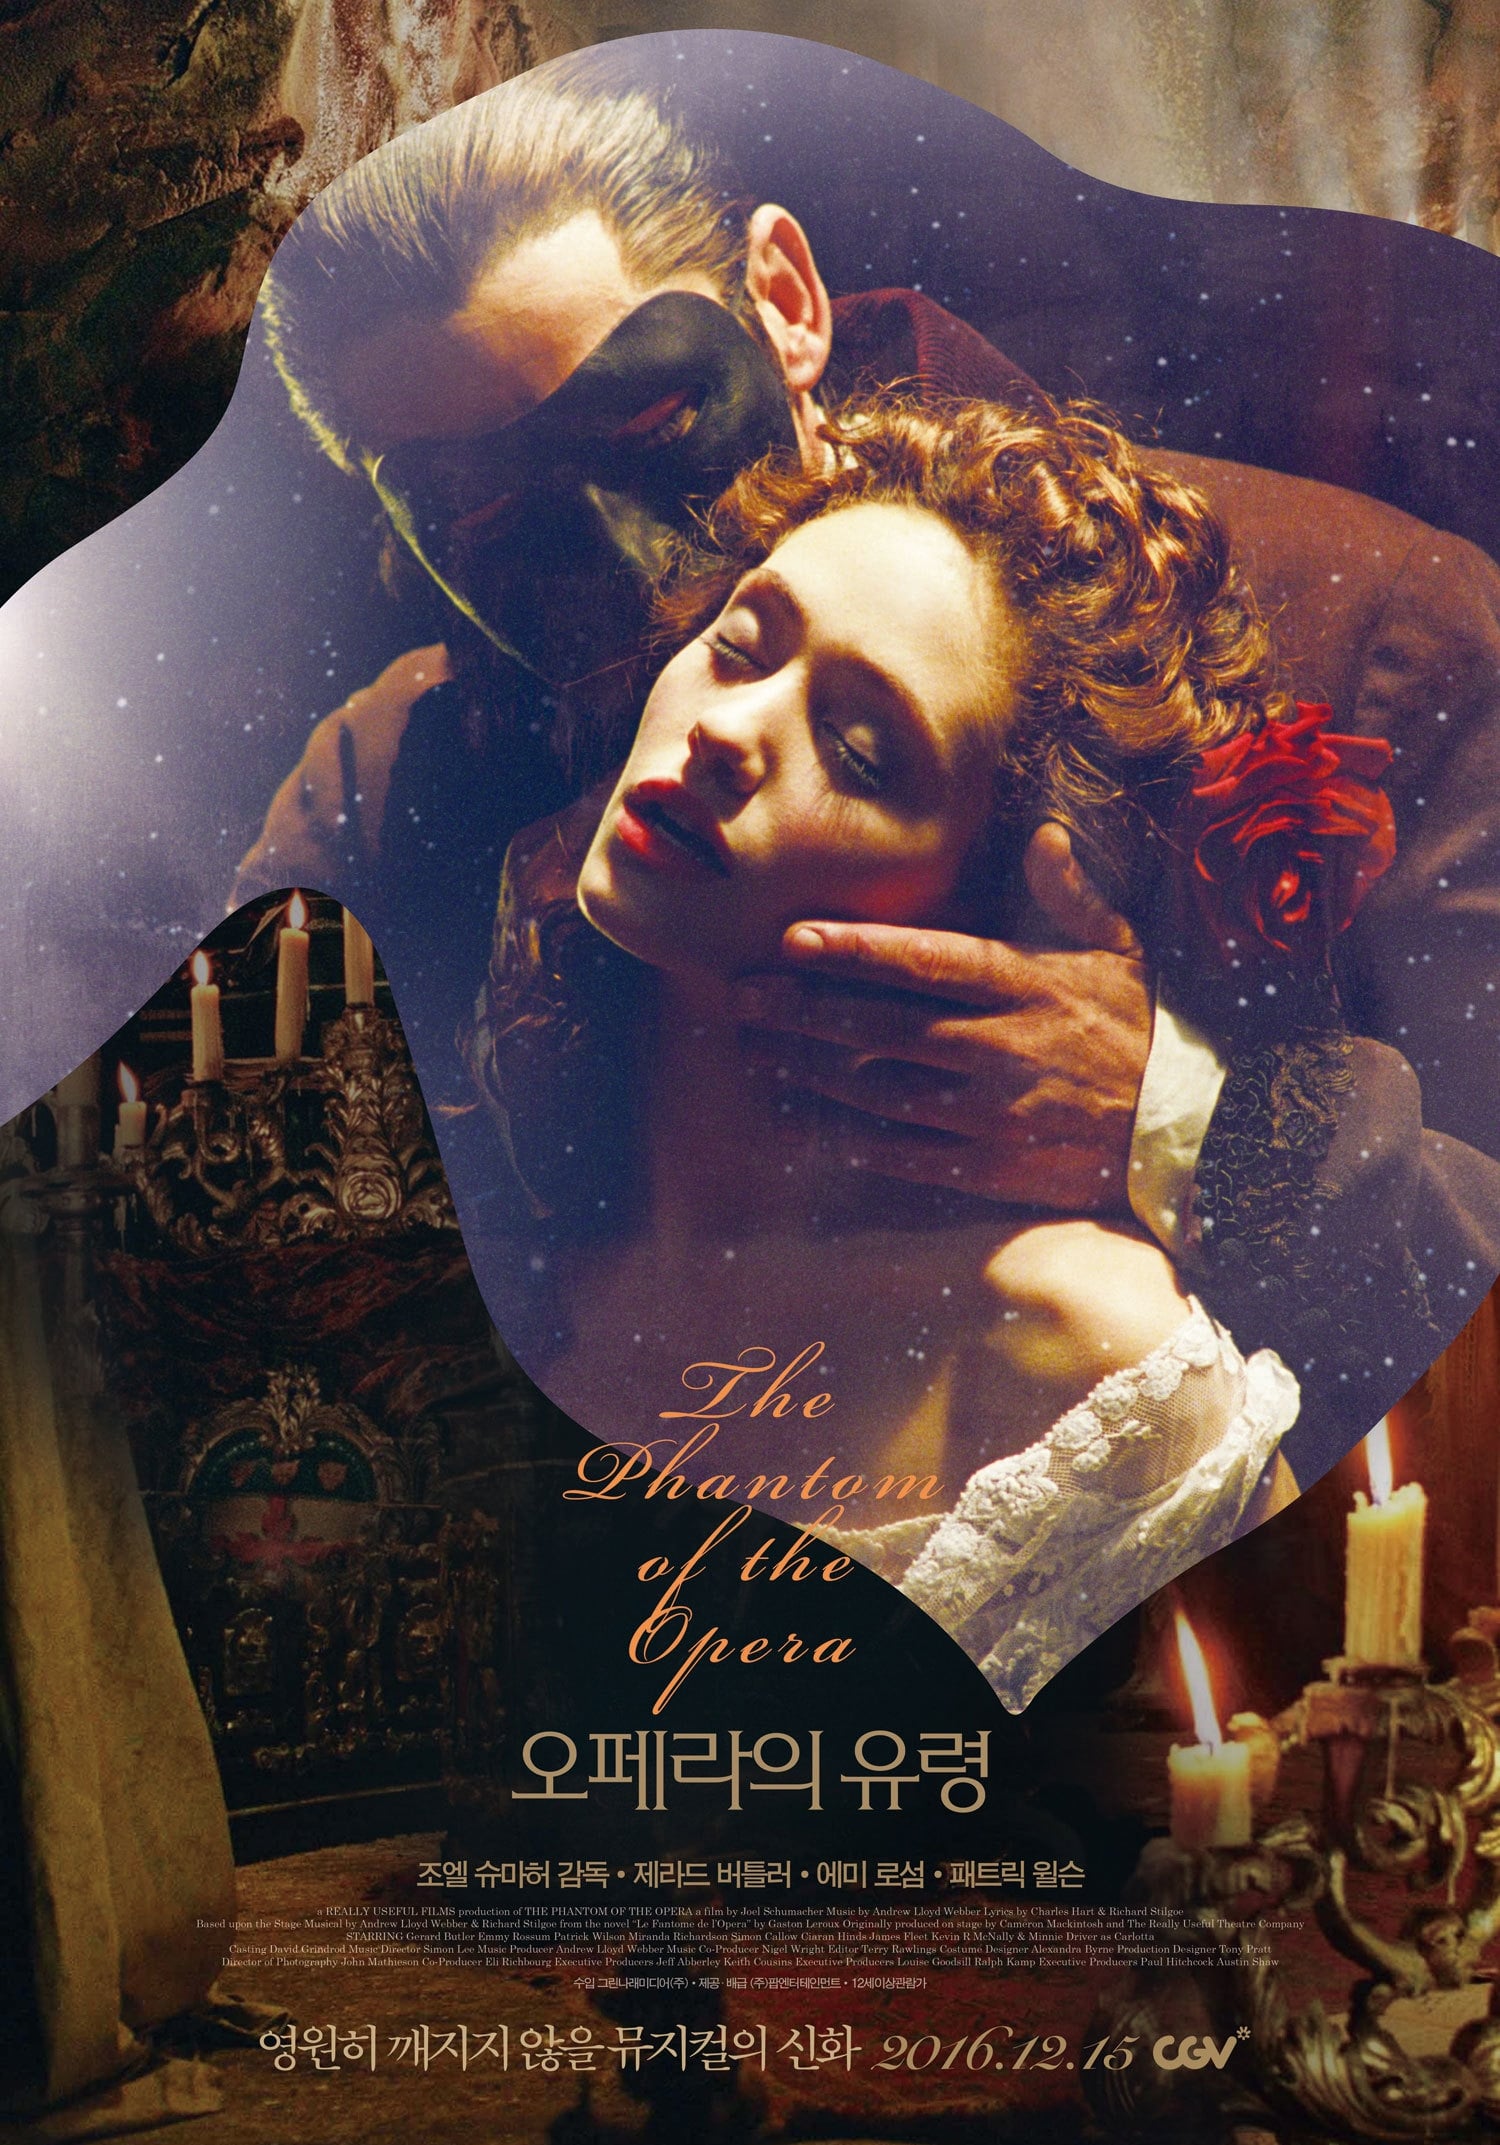 watch phantom of the opera movie online free